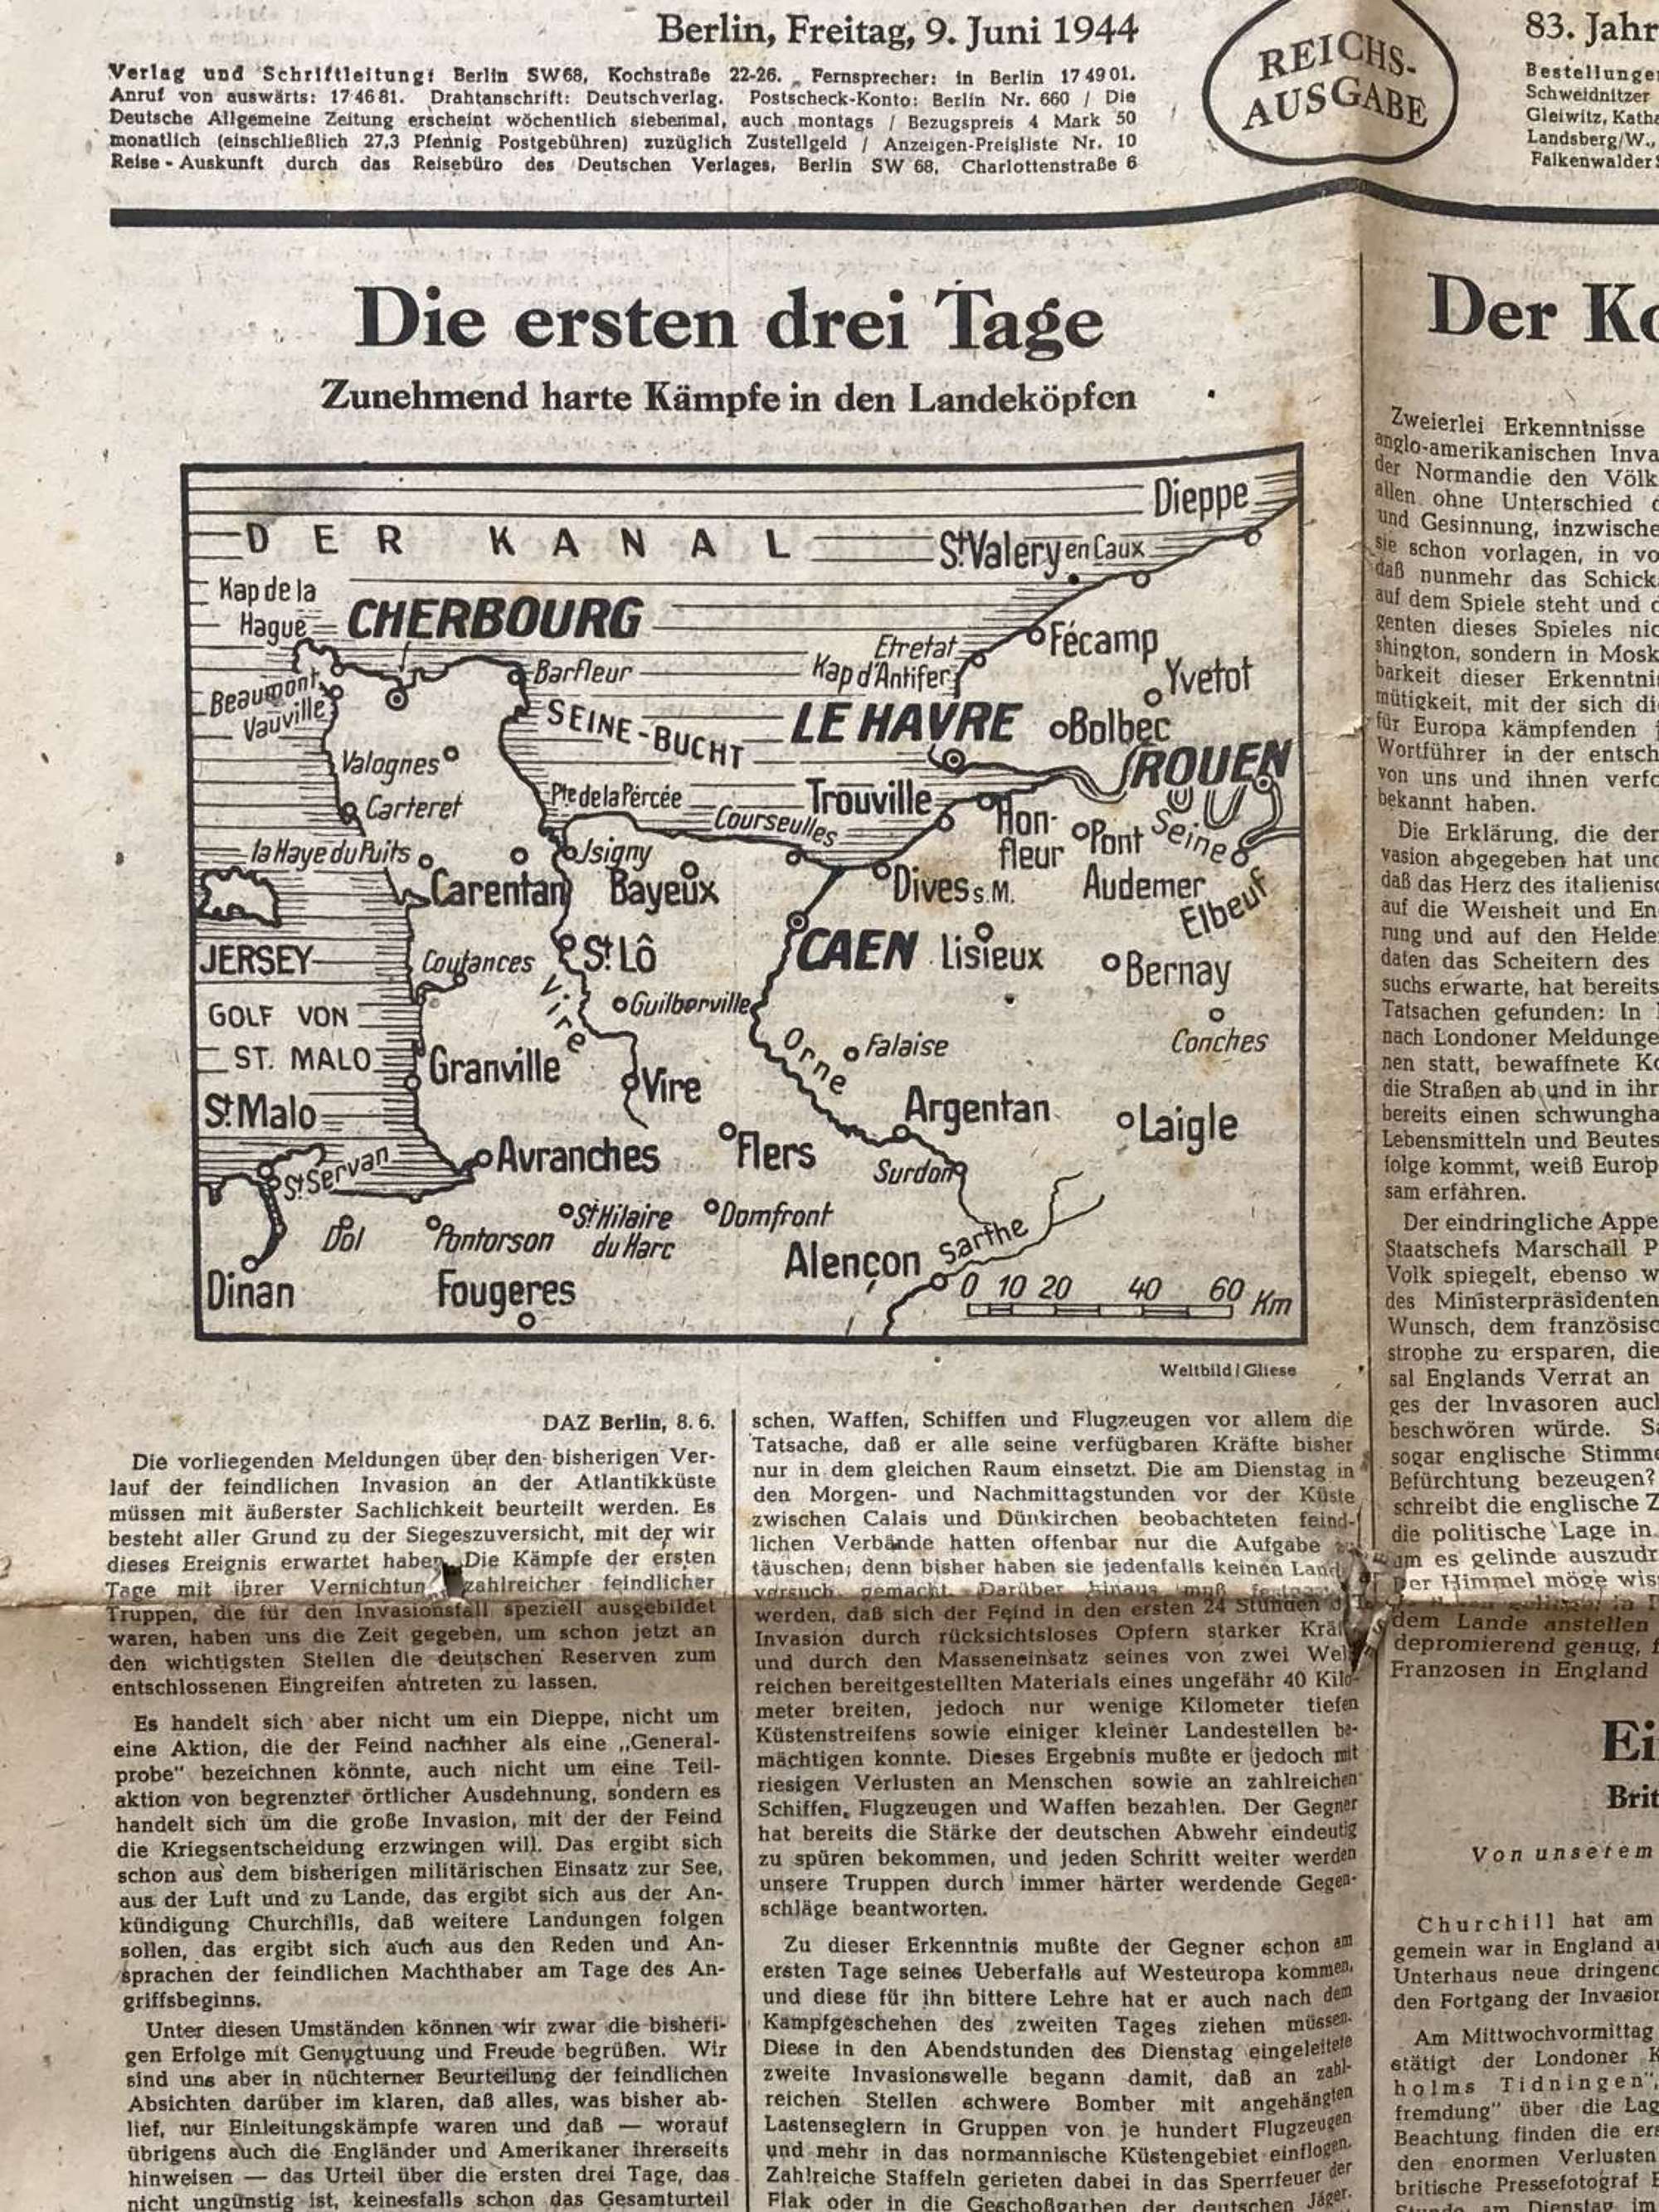 German newspaper announcing D Day